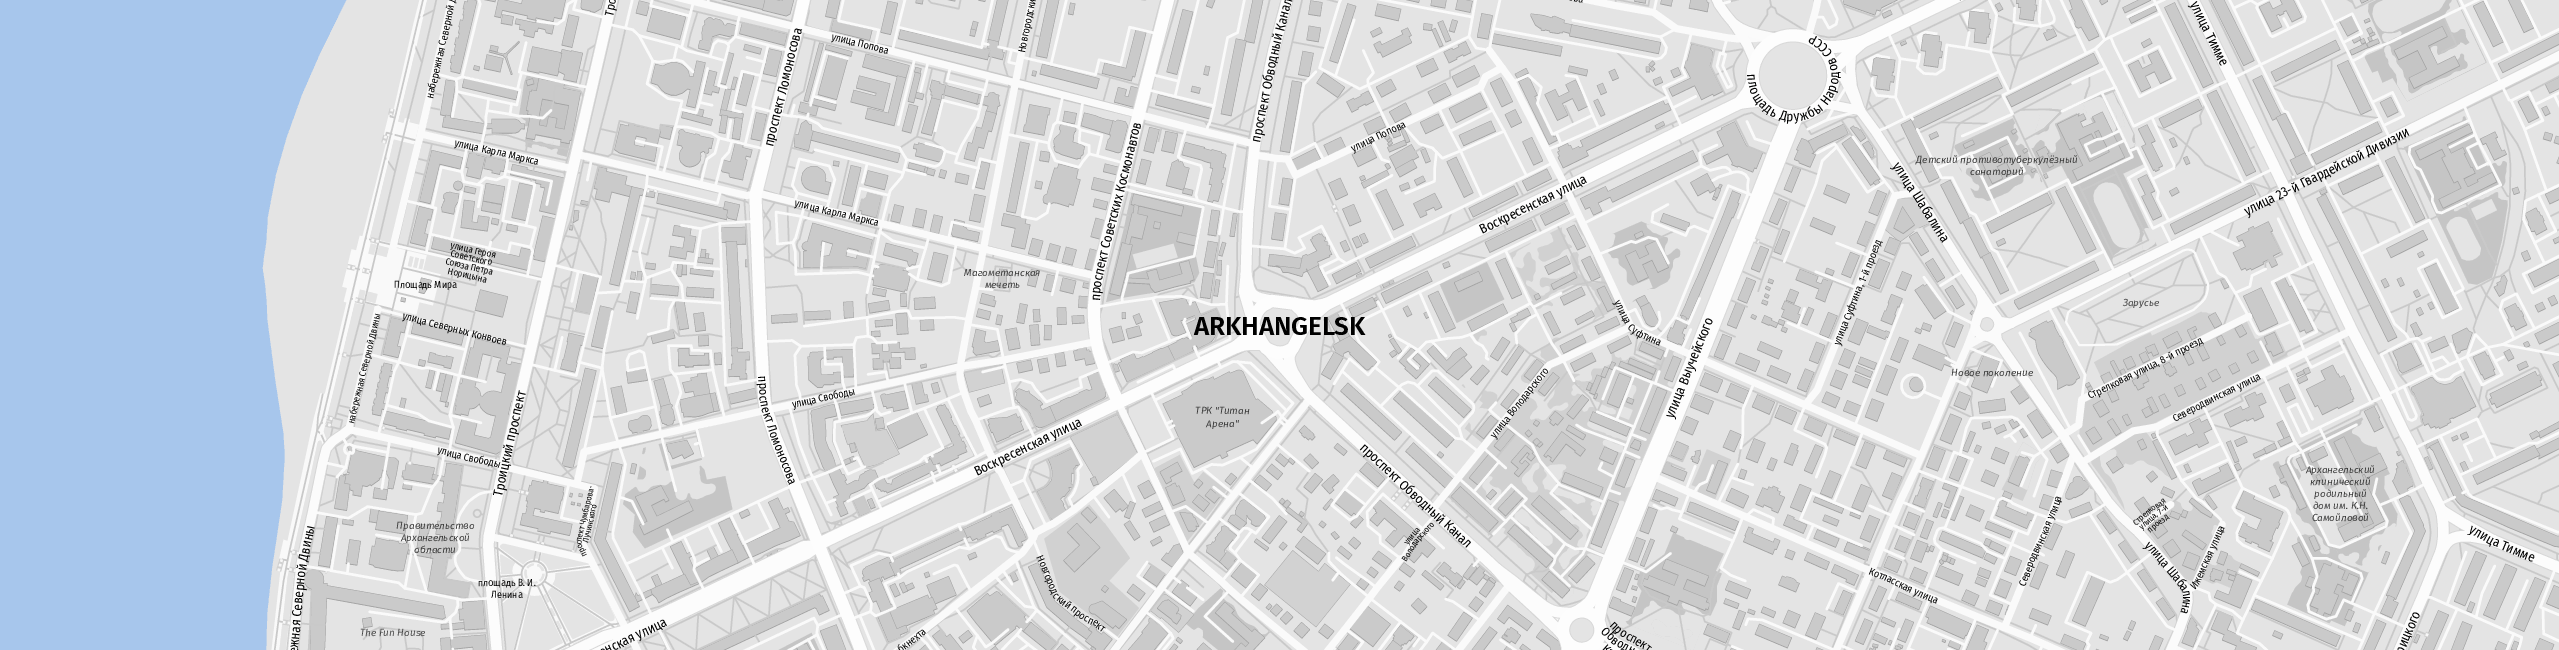 Stadtplan Arkhangelsk zum Downloaden.